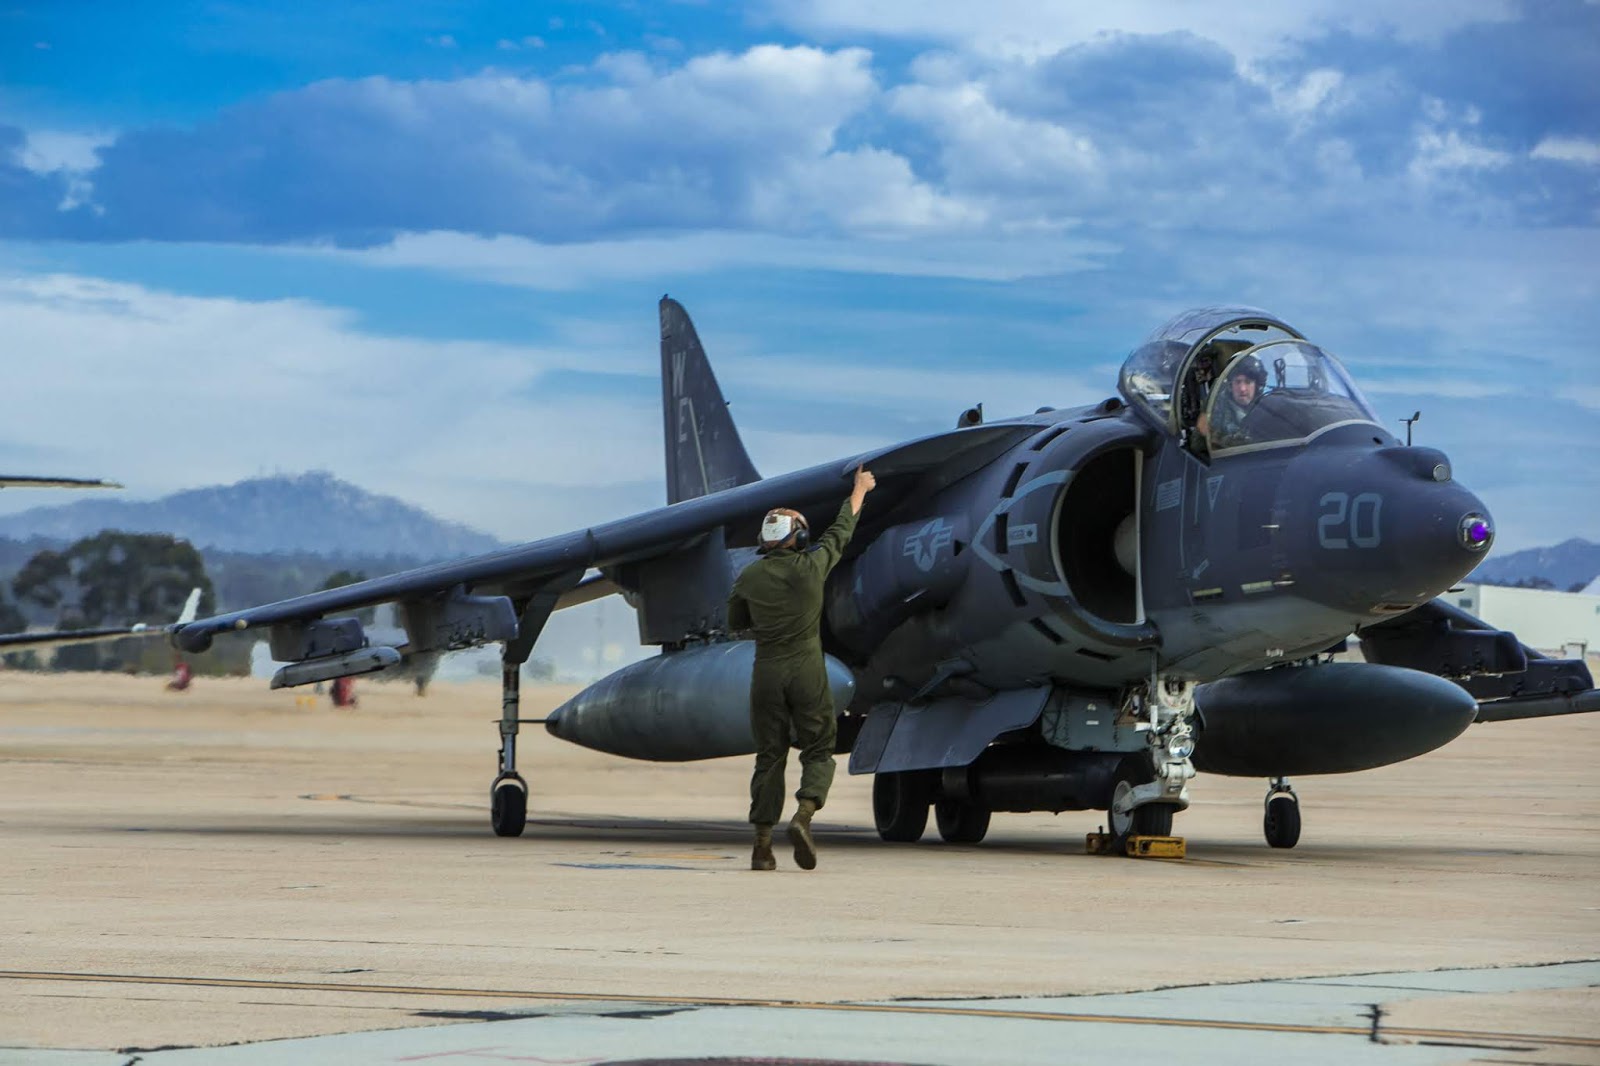 Av 8b. Av-8b Harrier II. Av-8b Harrier. Av-8b Harrier II Plus. TAV-8b Harrier II.